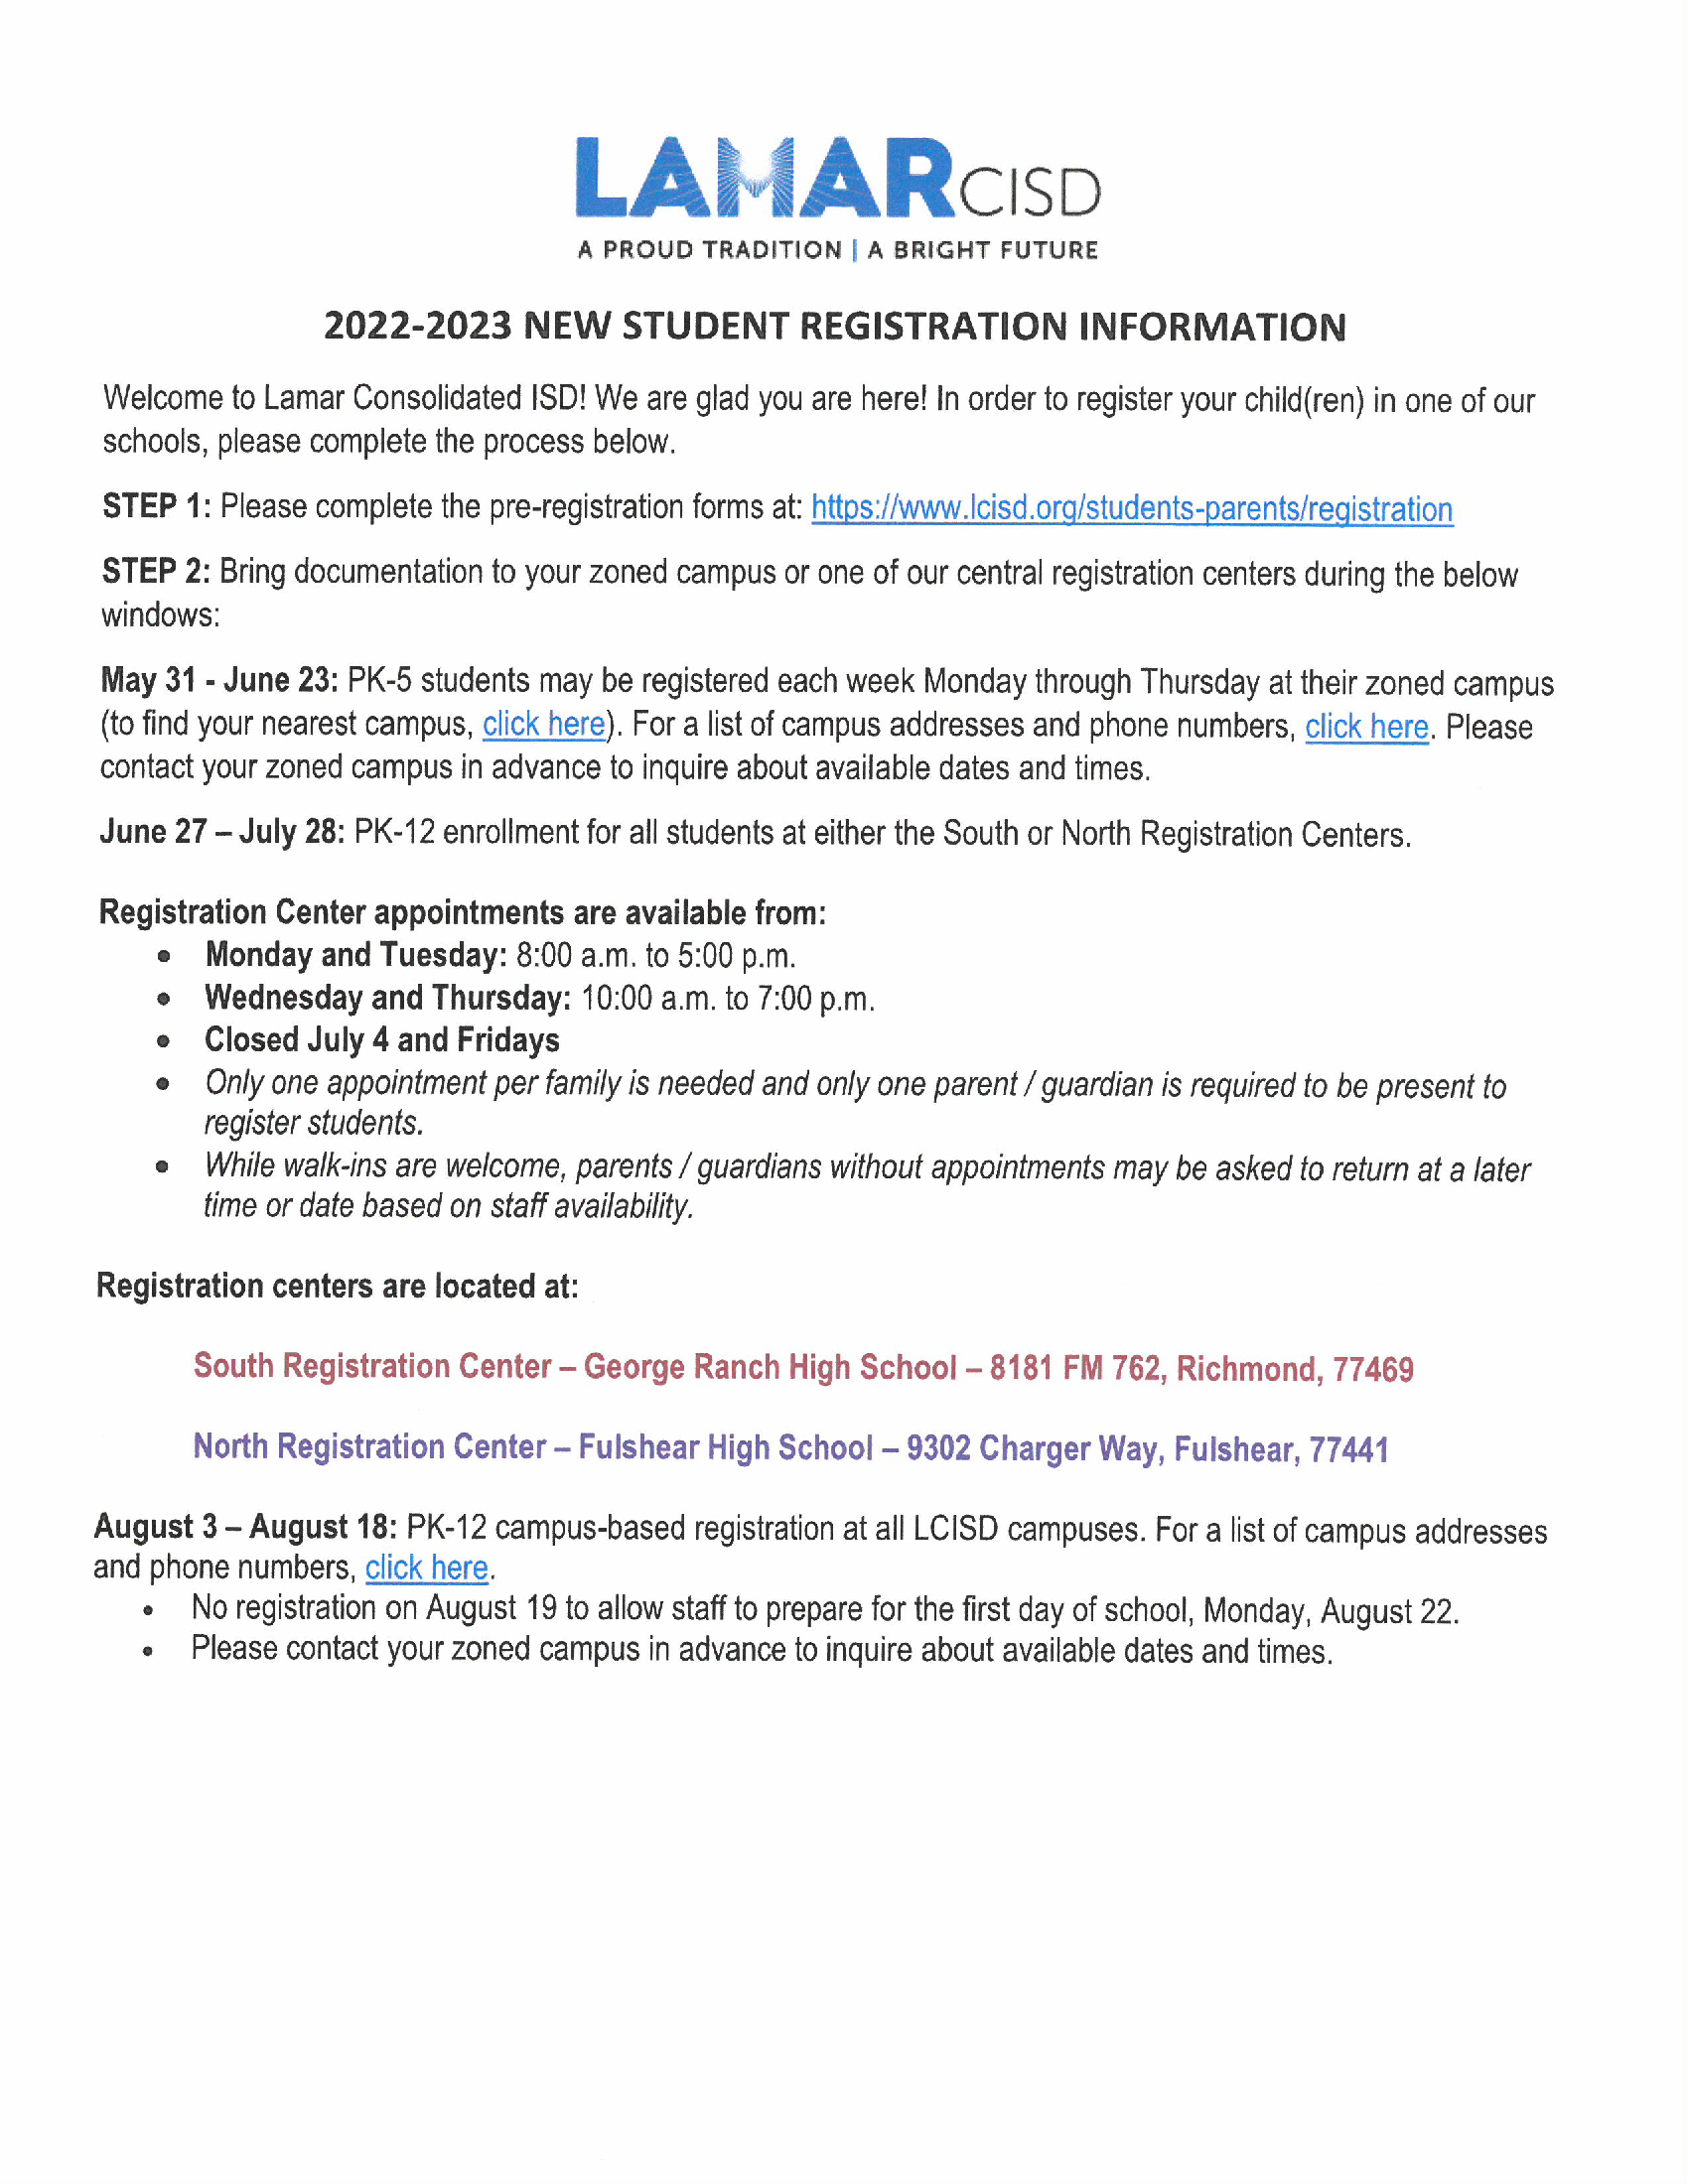 2022-2023 New Student Registration Information 1 of 1